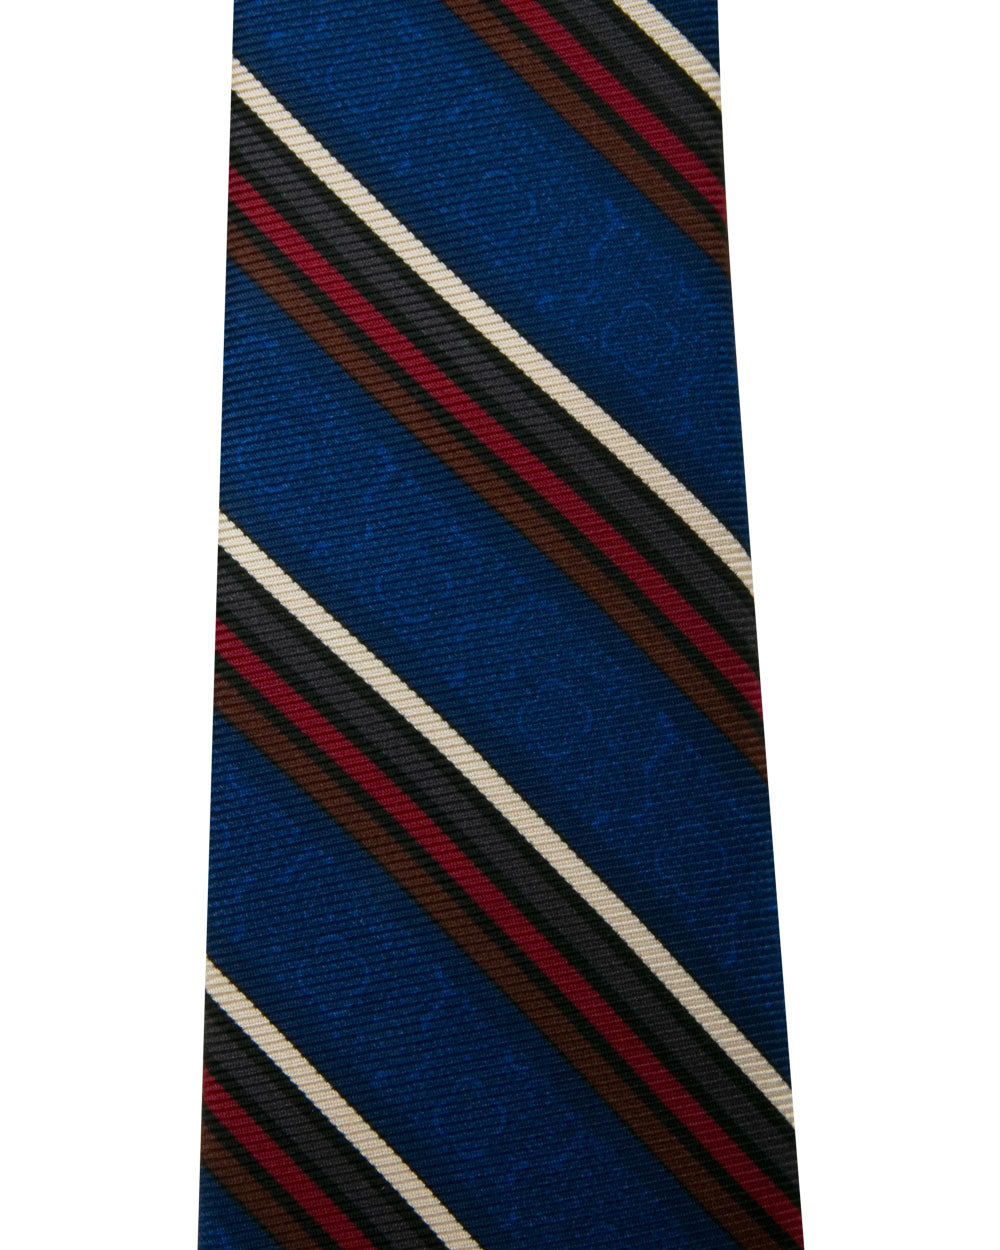 Navy Multicolor Stripe and Medallion Tie